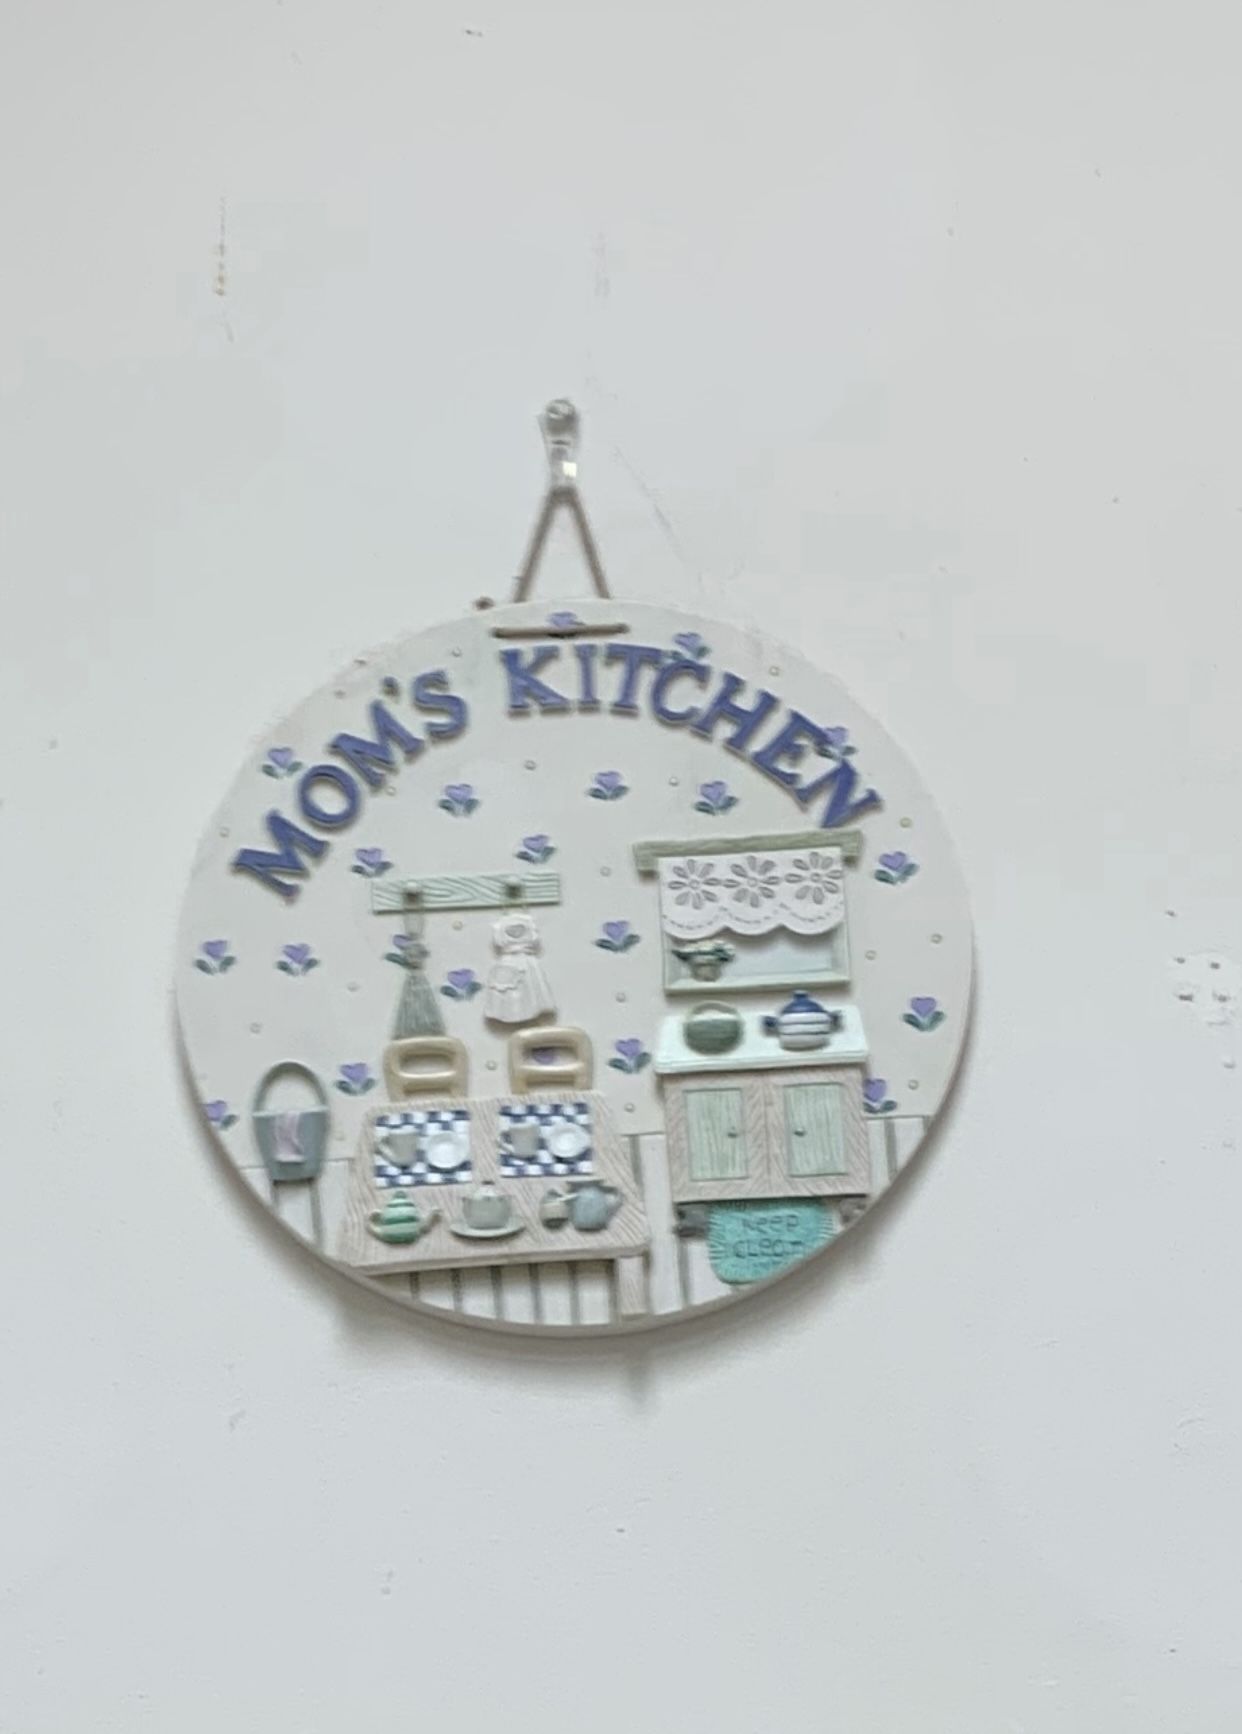 Ceramic Wall Mom’s Kitchen Sign $12